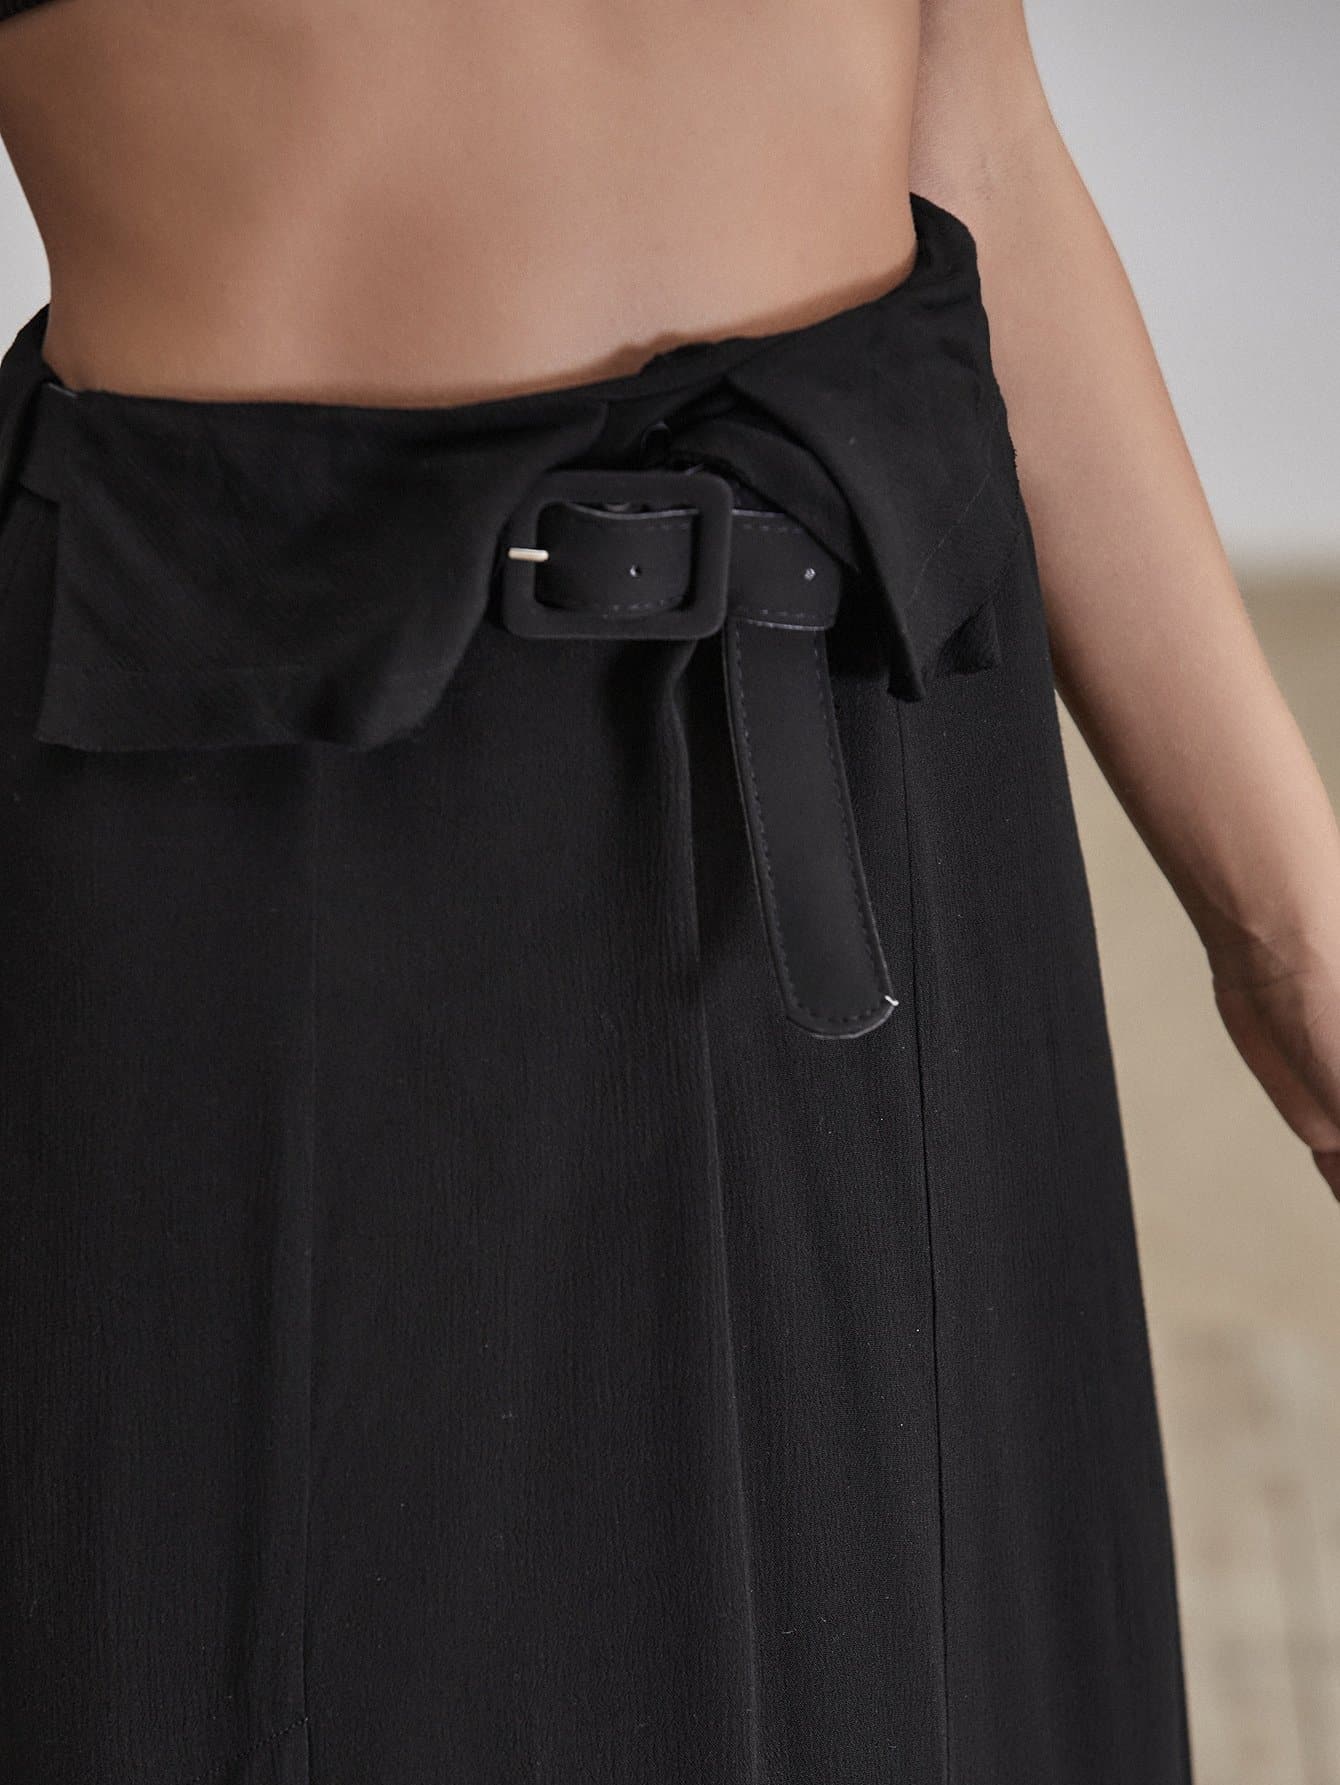 Black Split Thigh Belted High Waist Solid Skirt